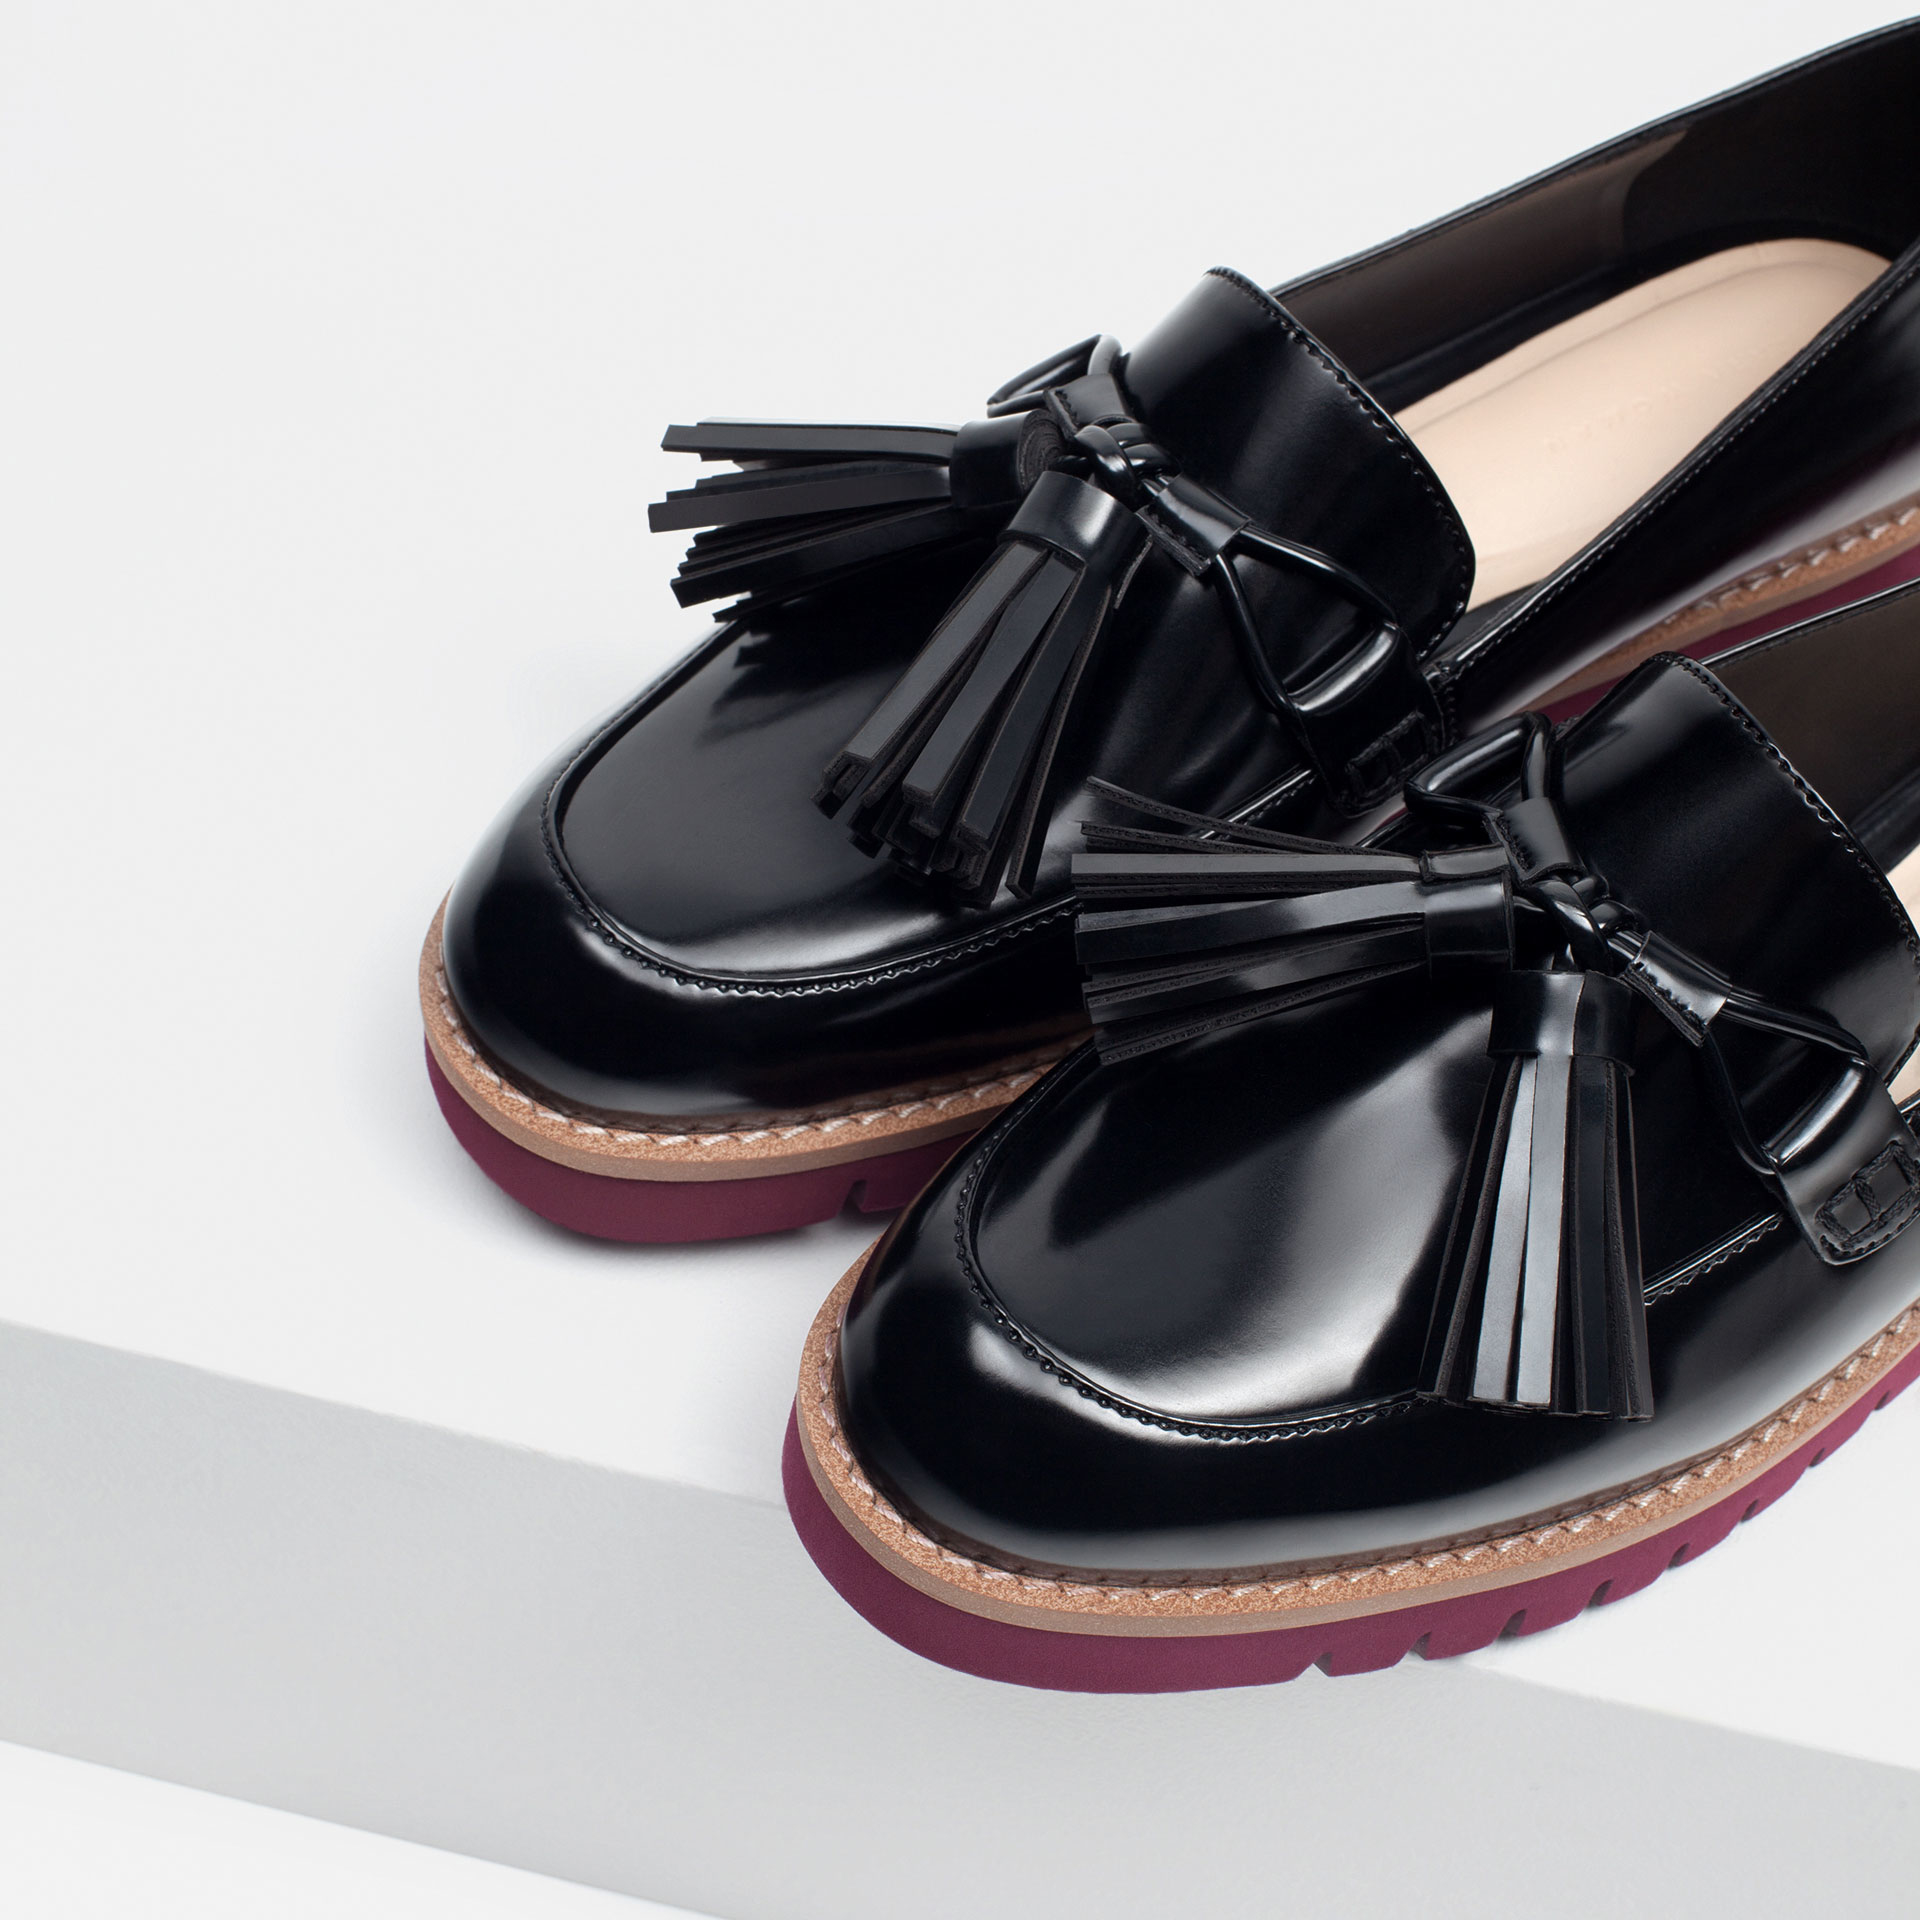 Zara Tasselled Loafers With Contrast Sole in Black | Lyst